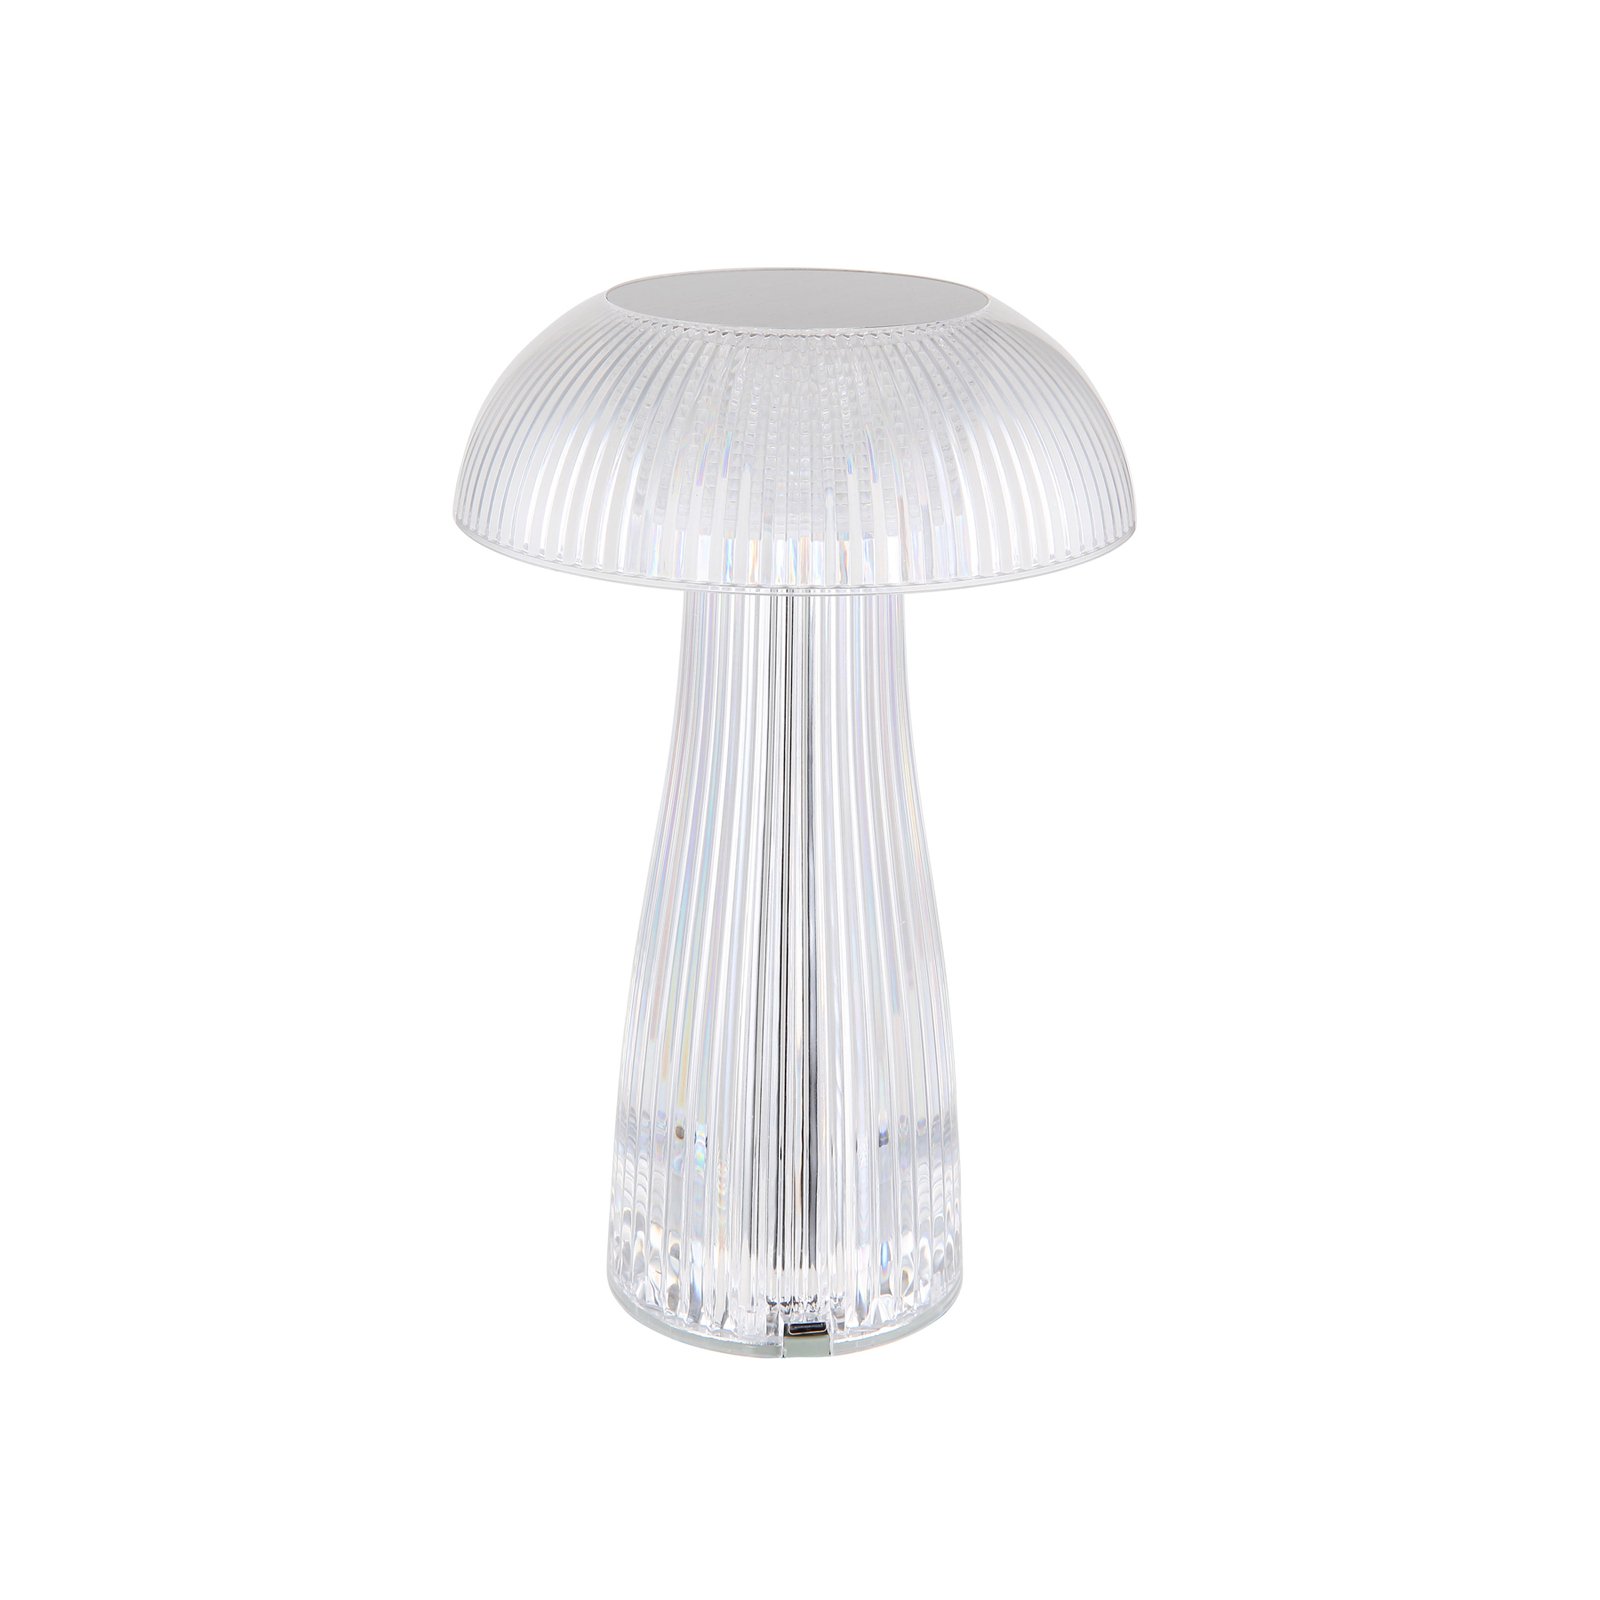 Lampa stołowa LED Gixi, kolor srebrny, wysokość 25 cm, CCT